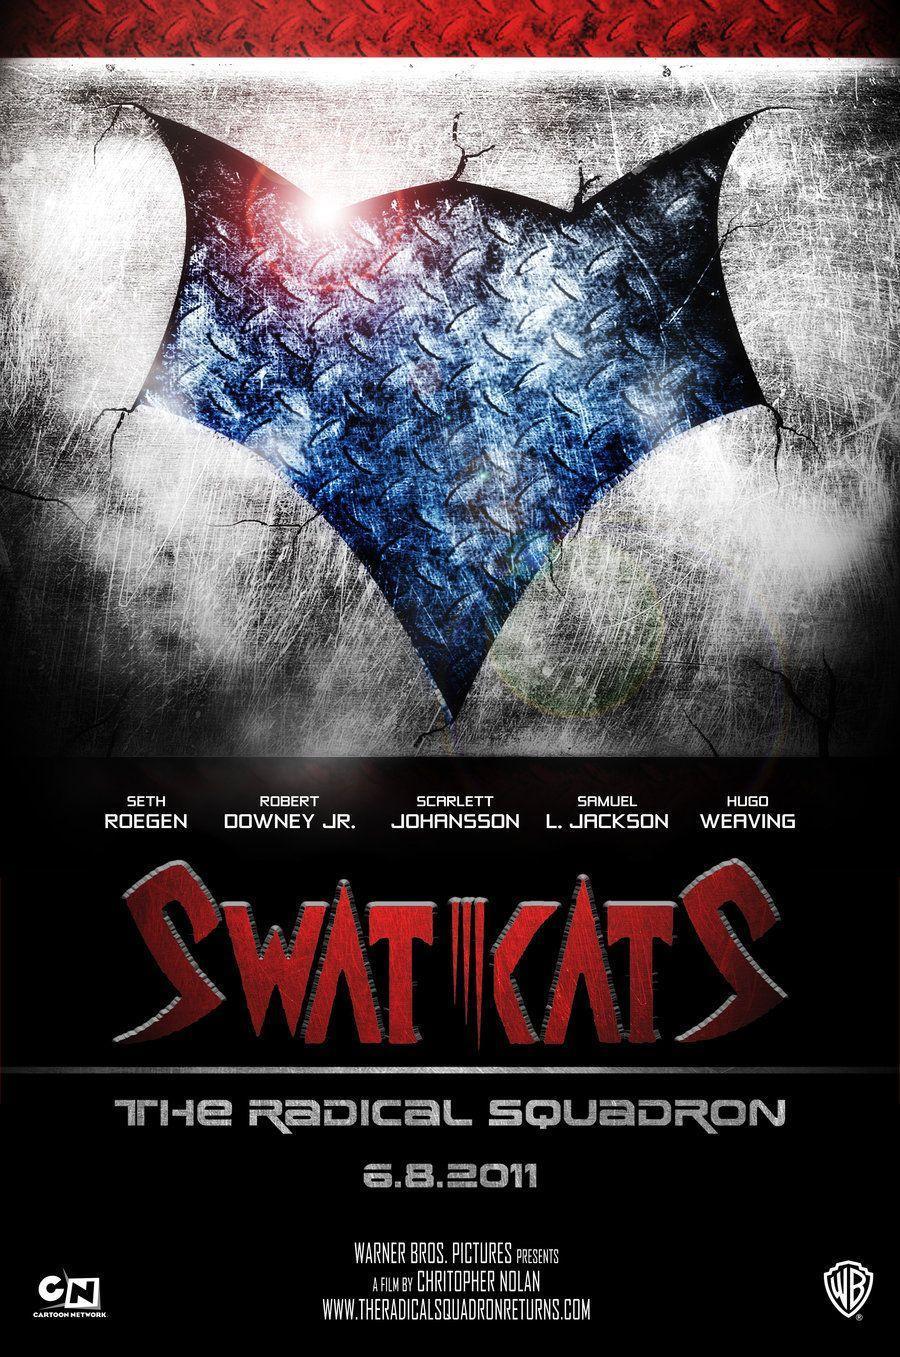 SWAT Kats favourites